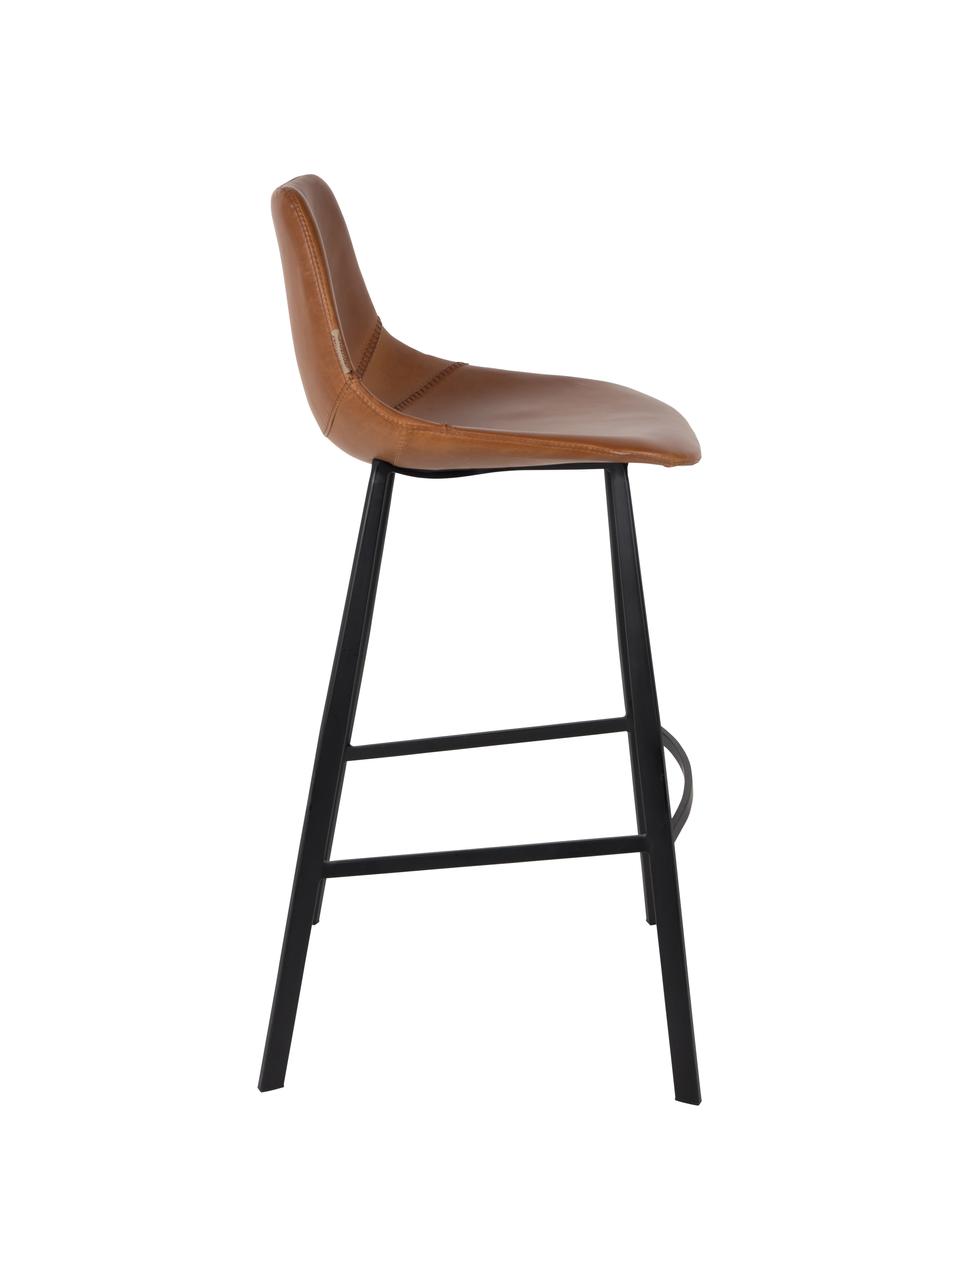 Chaise de bar en cuir synthétique Franky, Cuir synthétique brun, larg. 50 x haut. 106 cm